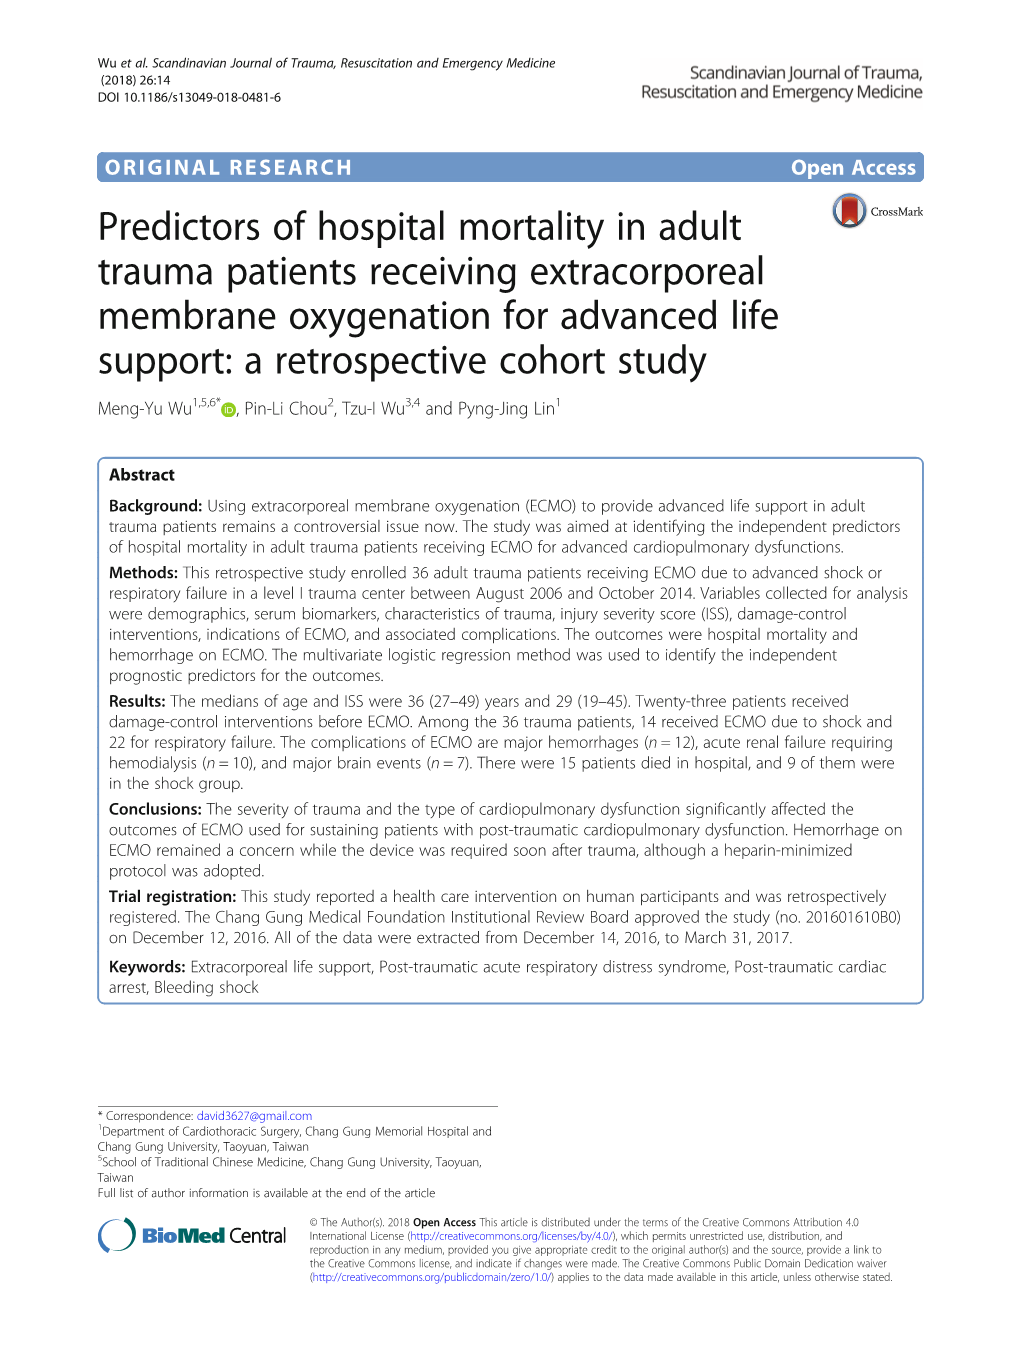 Predictors of Hospital Mortality in Adult Trauma Patients Receiving